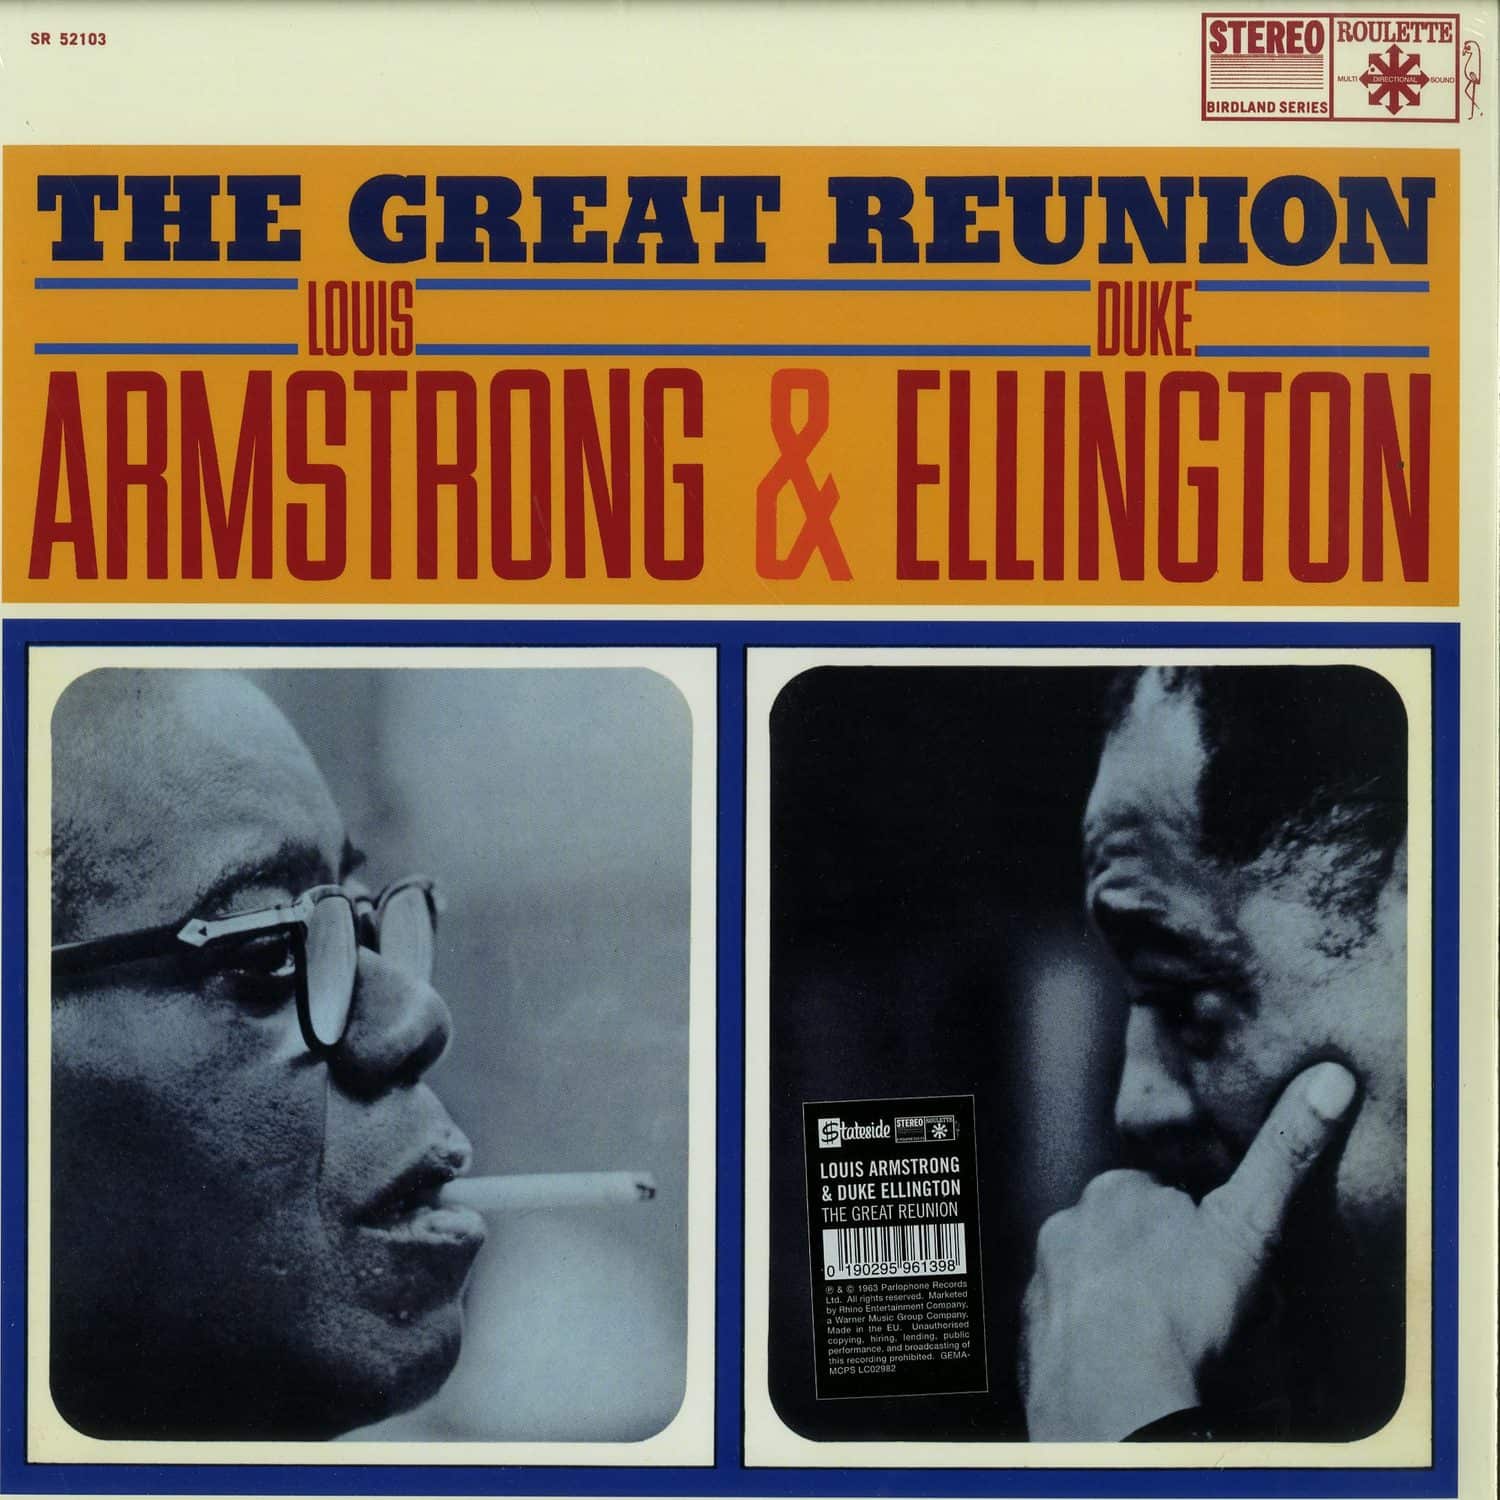 Louis Armstrong & Duke Ellington - THE GREAT REUNION 